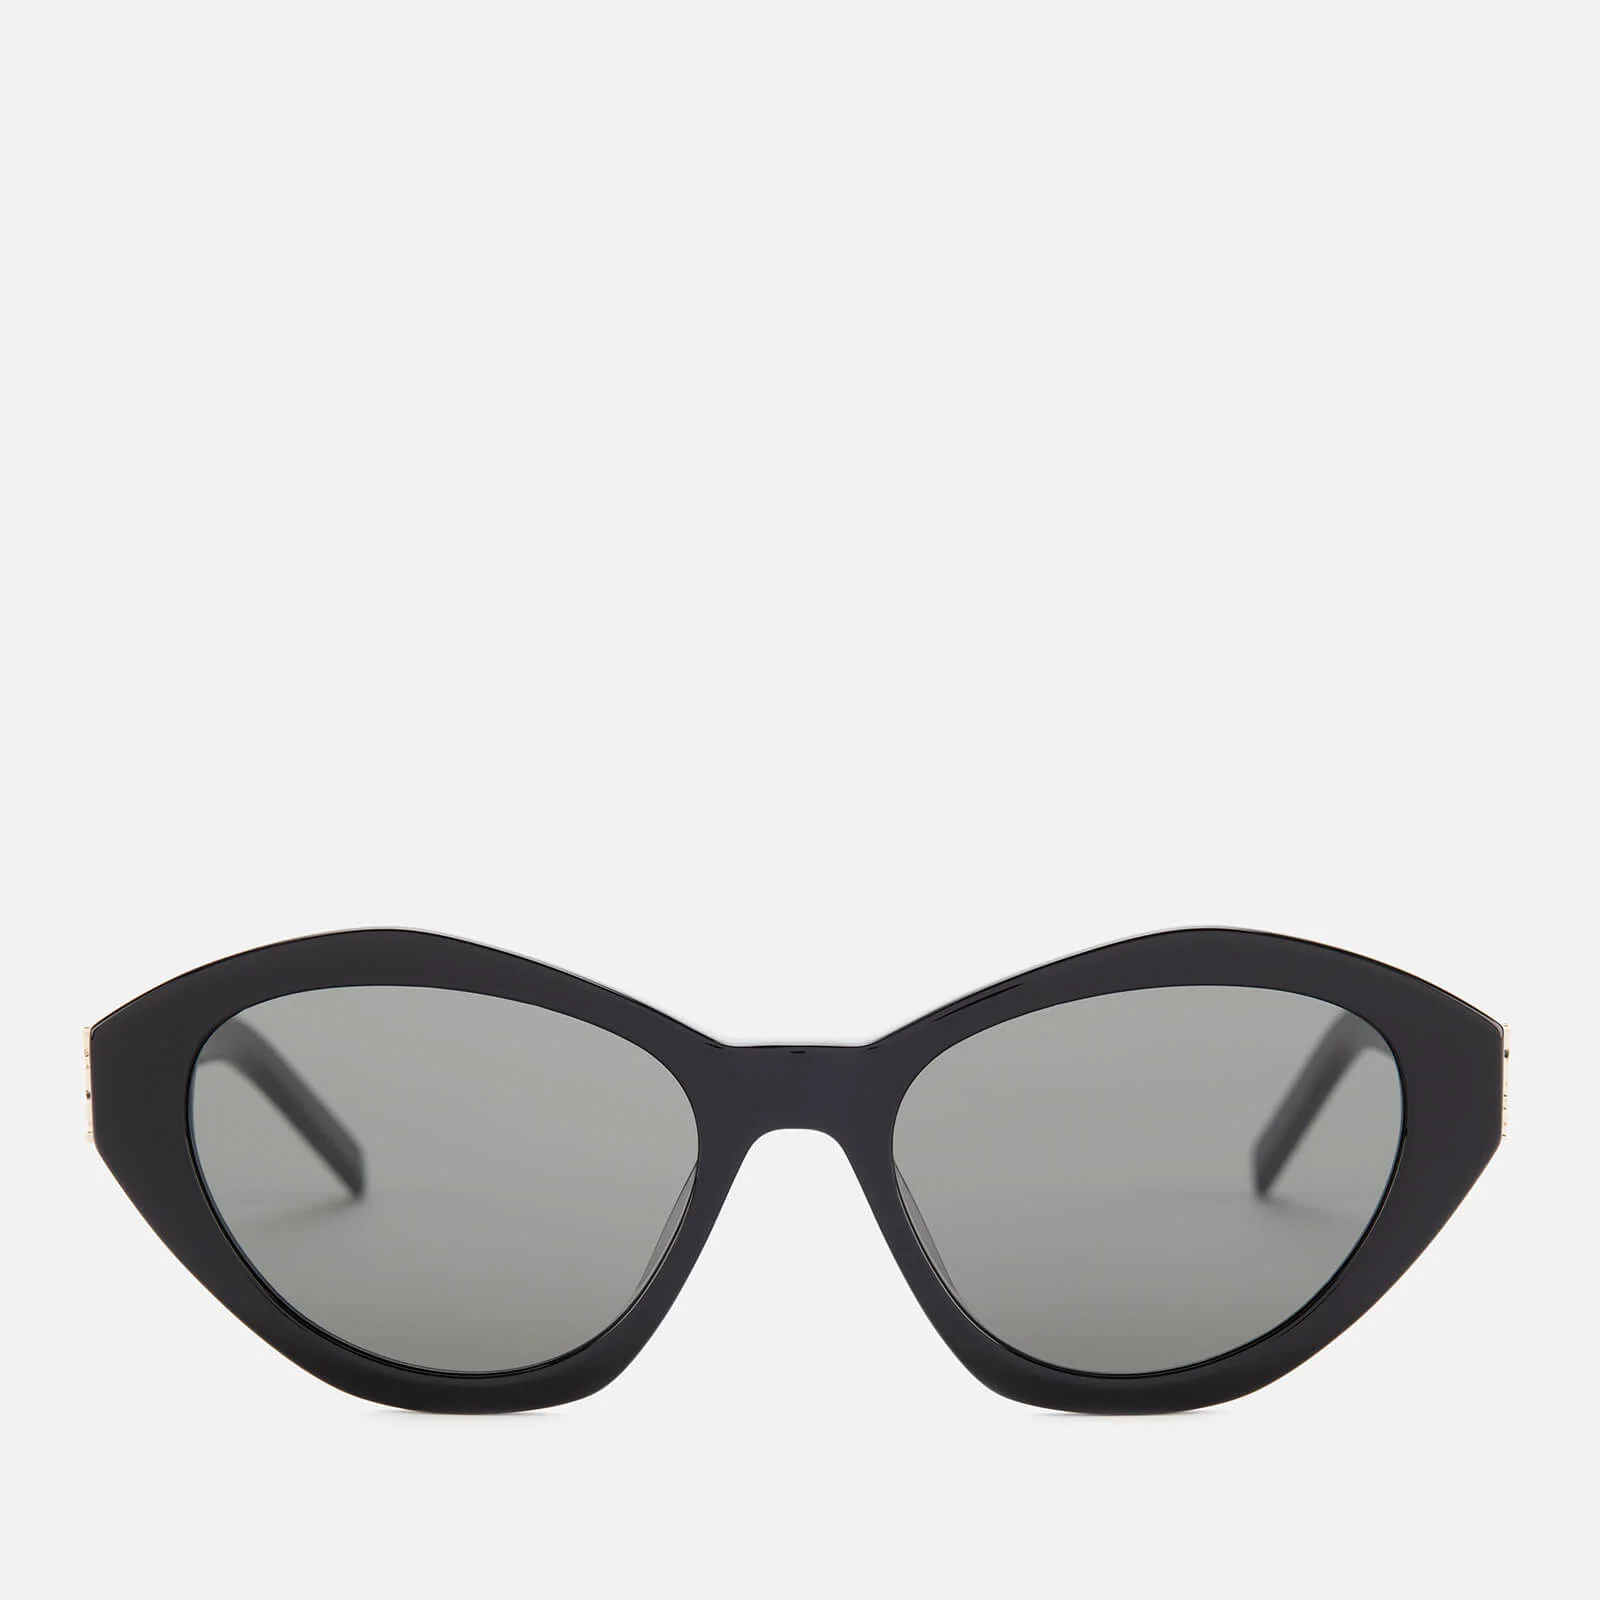 Saint Laurent Women's Cat Eye Acetate Sunglasses - Black/Grey Image 1